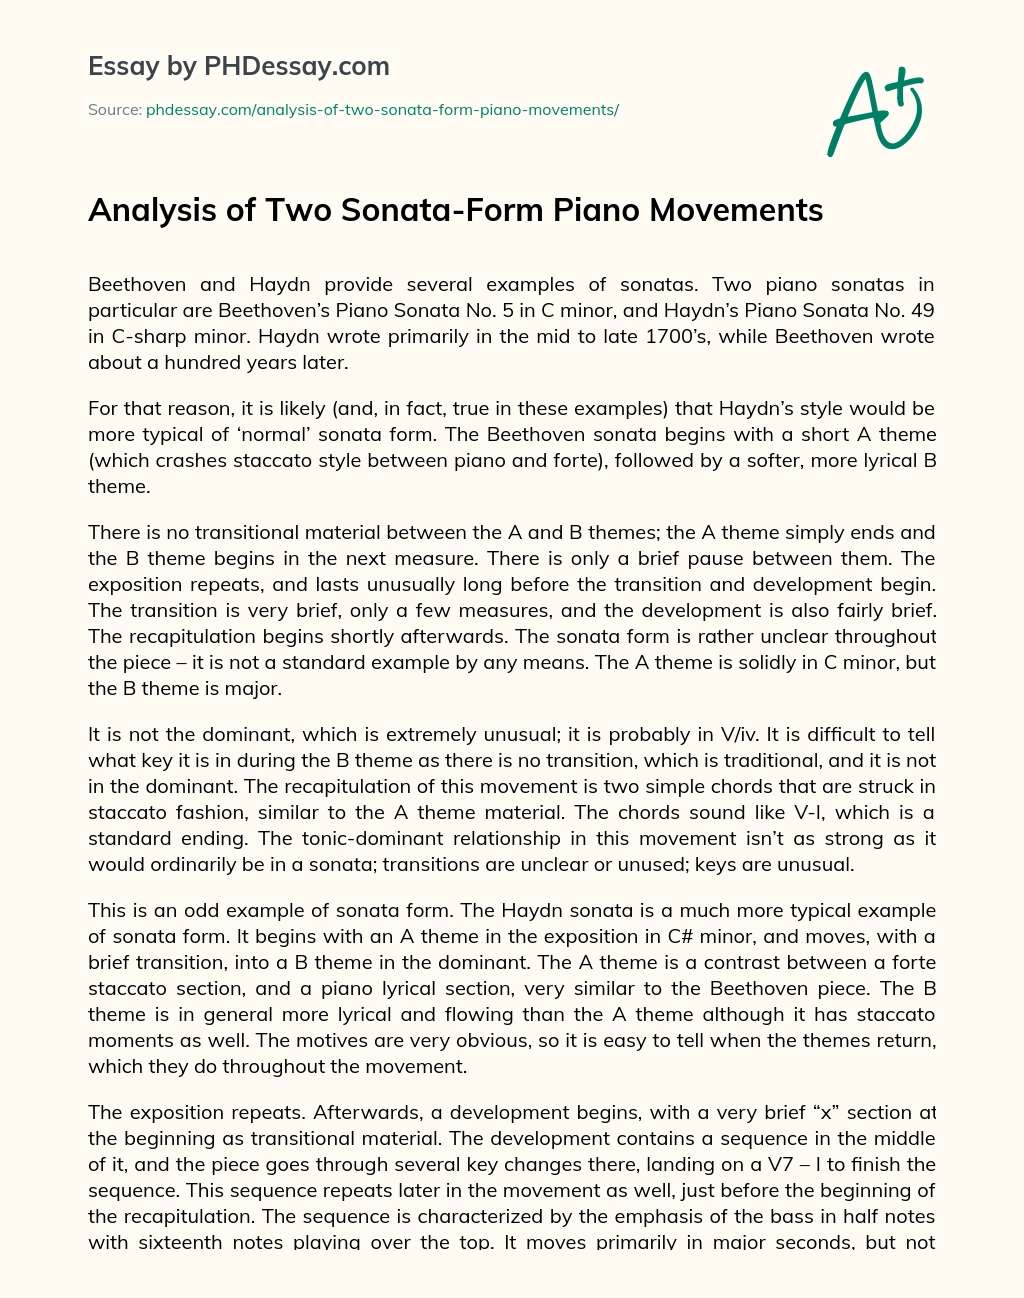 Analysis of Two Sonata-Form Piano Movements essay